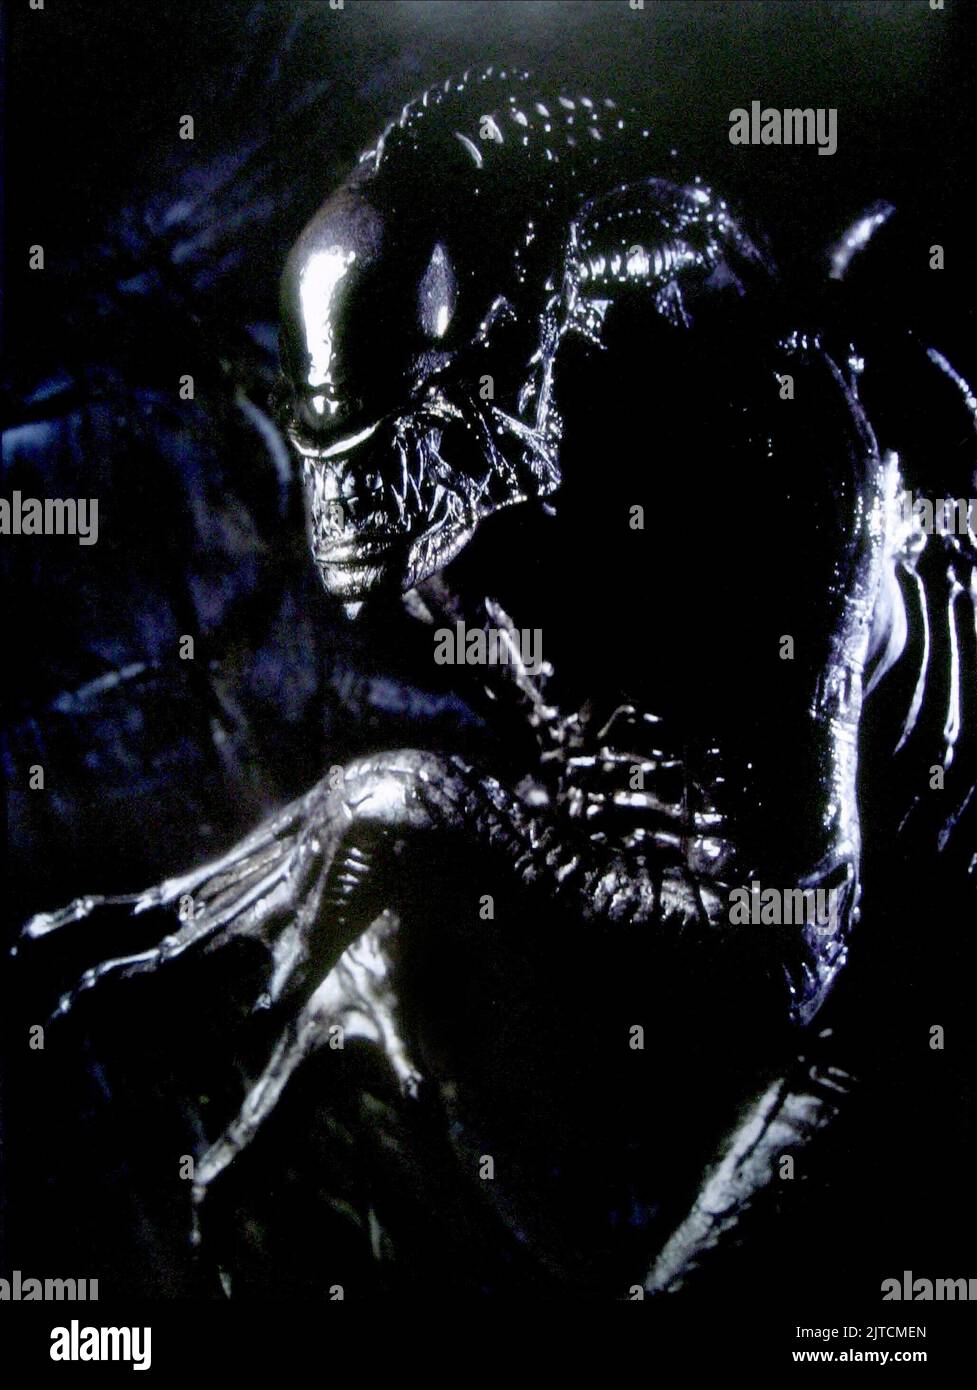 ALIEN, Aliens Vs. PREDATOR: Requiem, 2007 Foto Stock